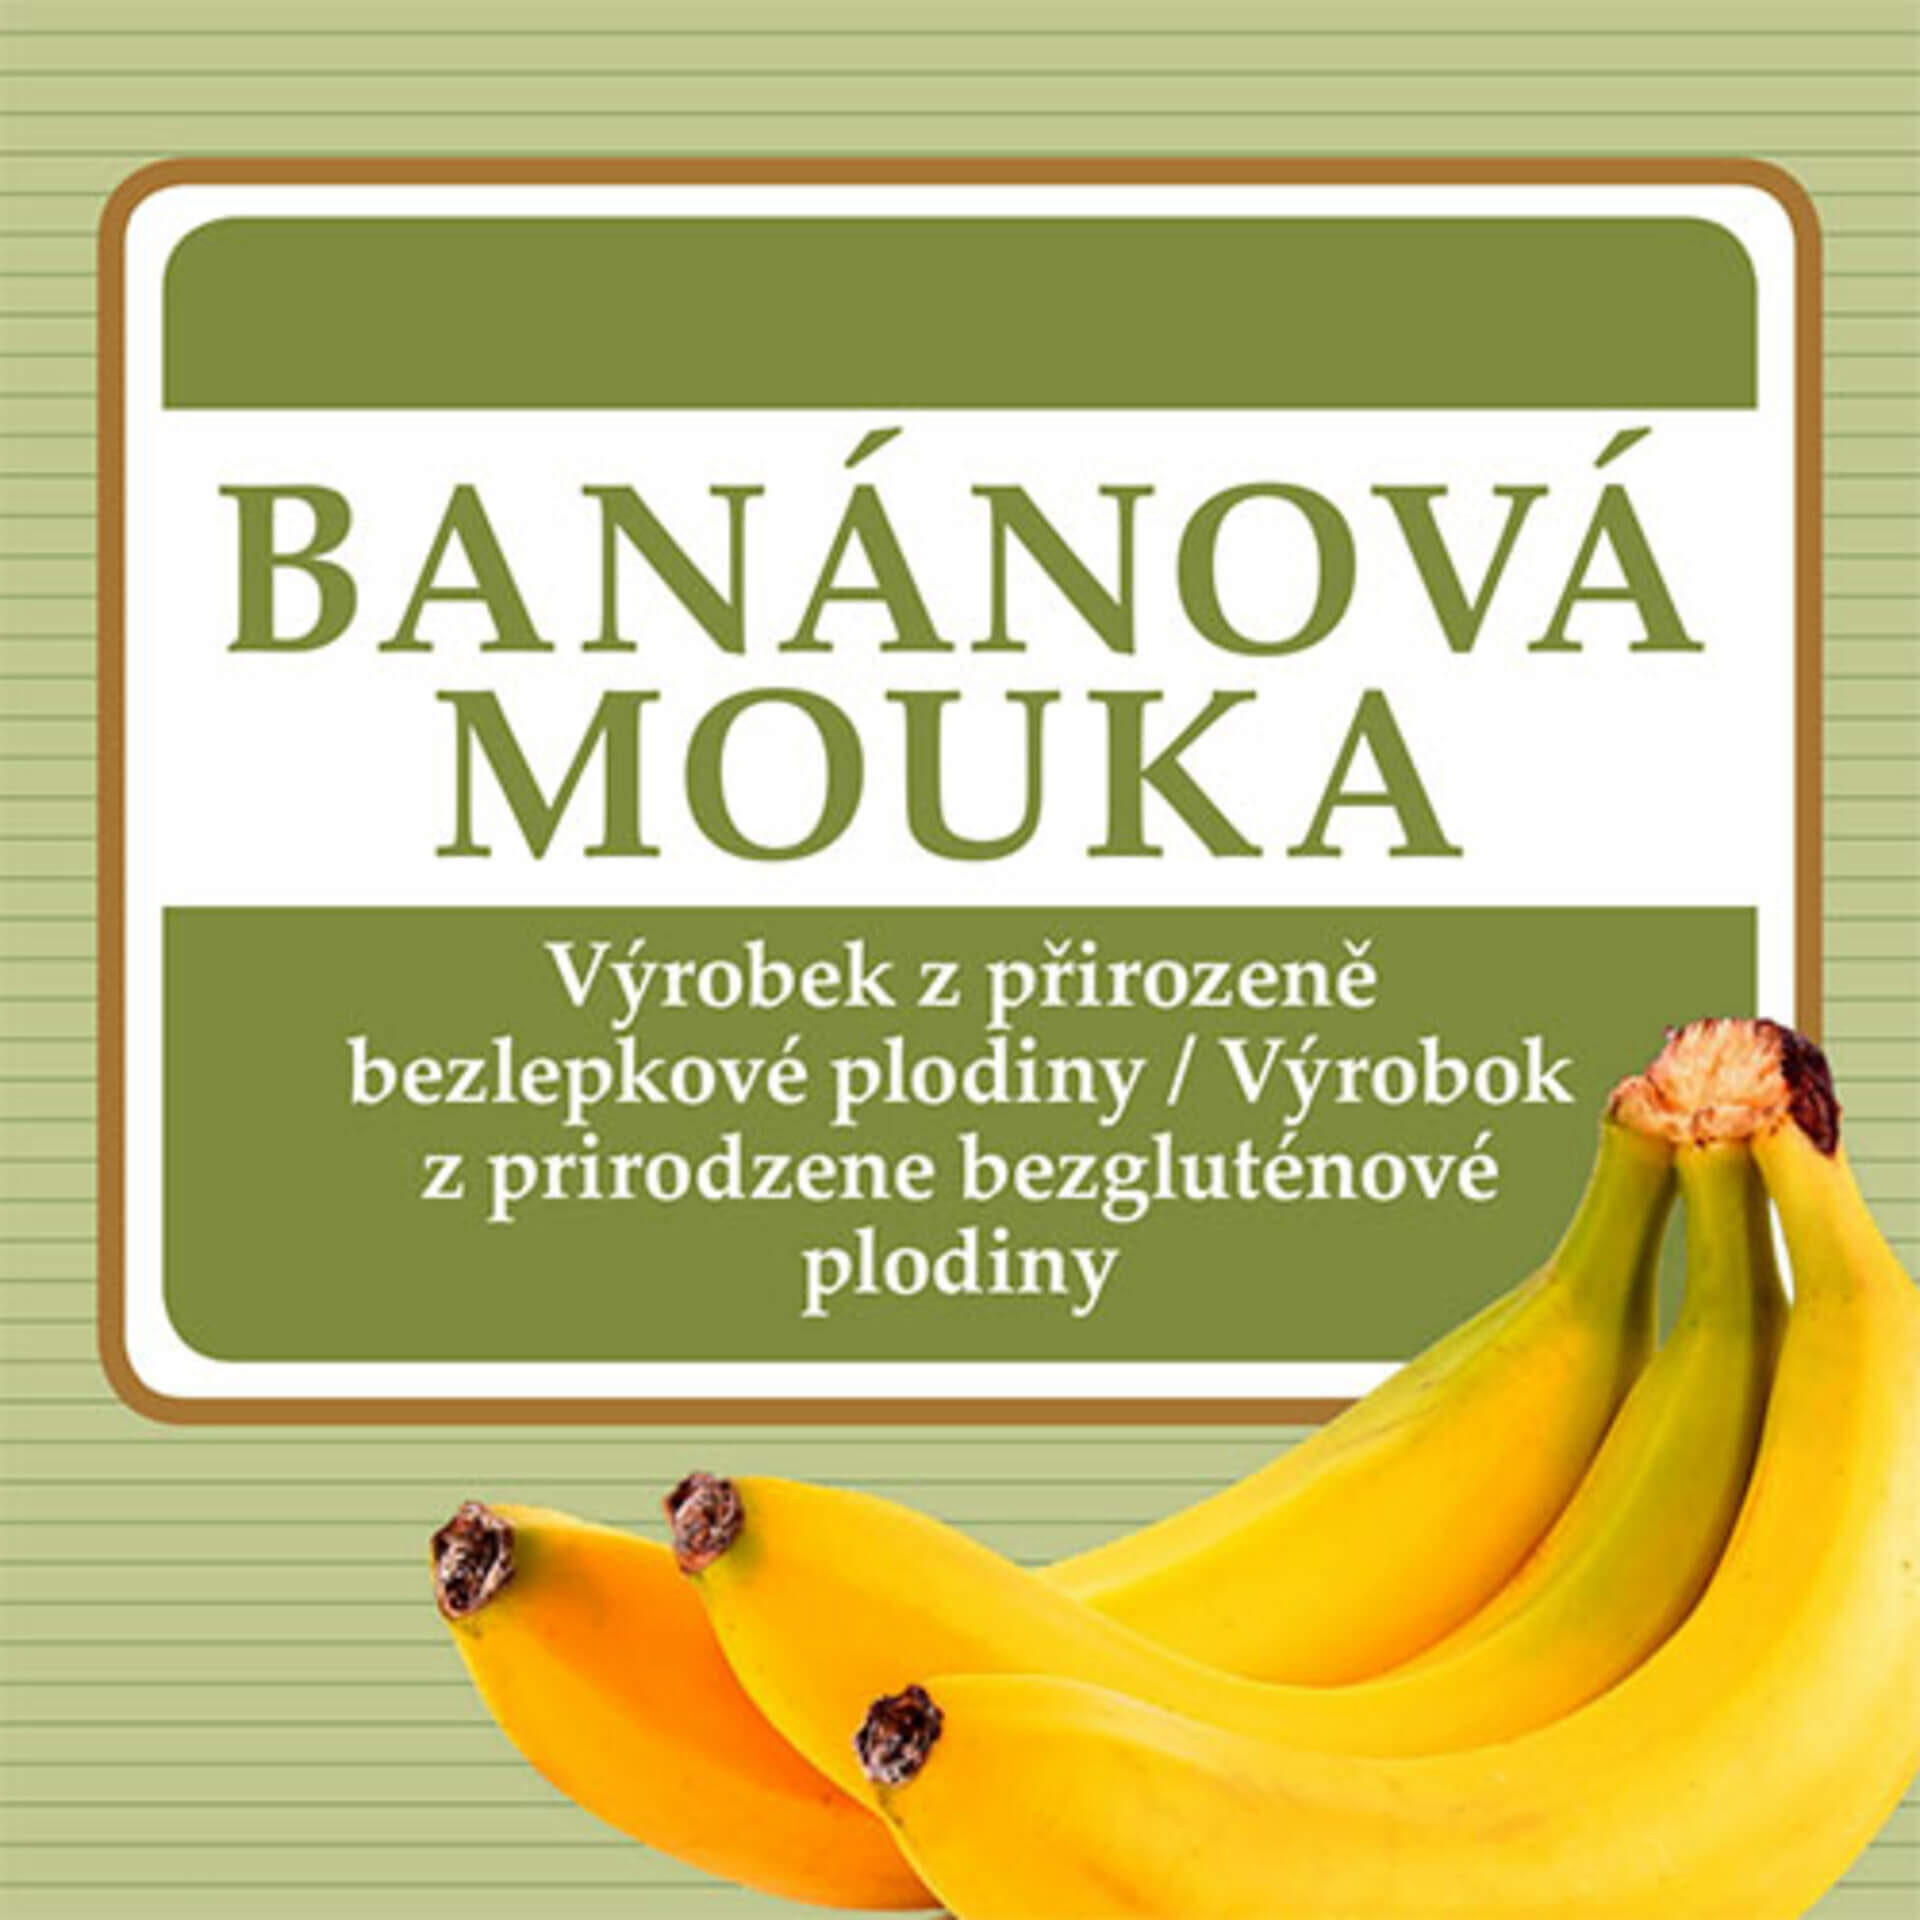 Adveni Banánová mouka 250 g Obrázek